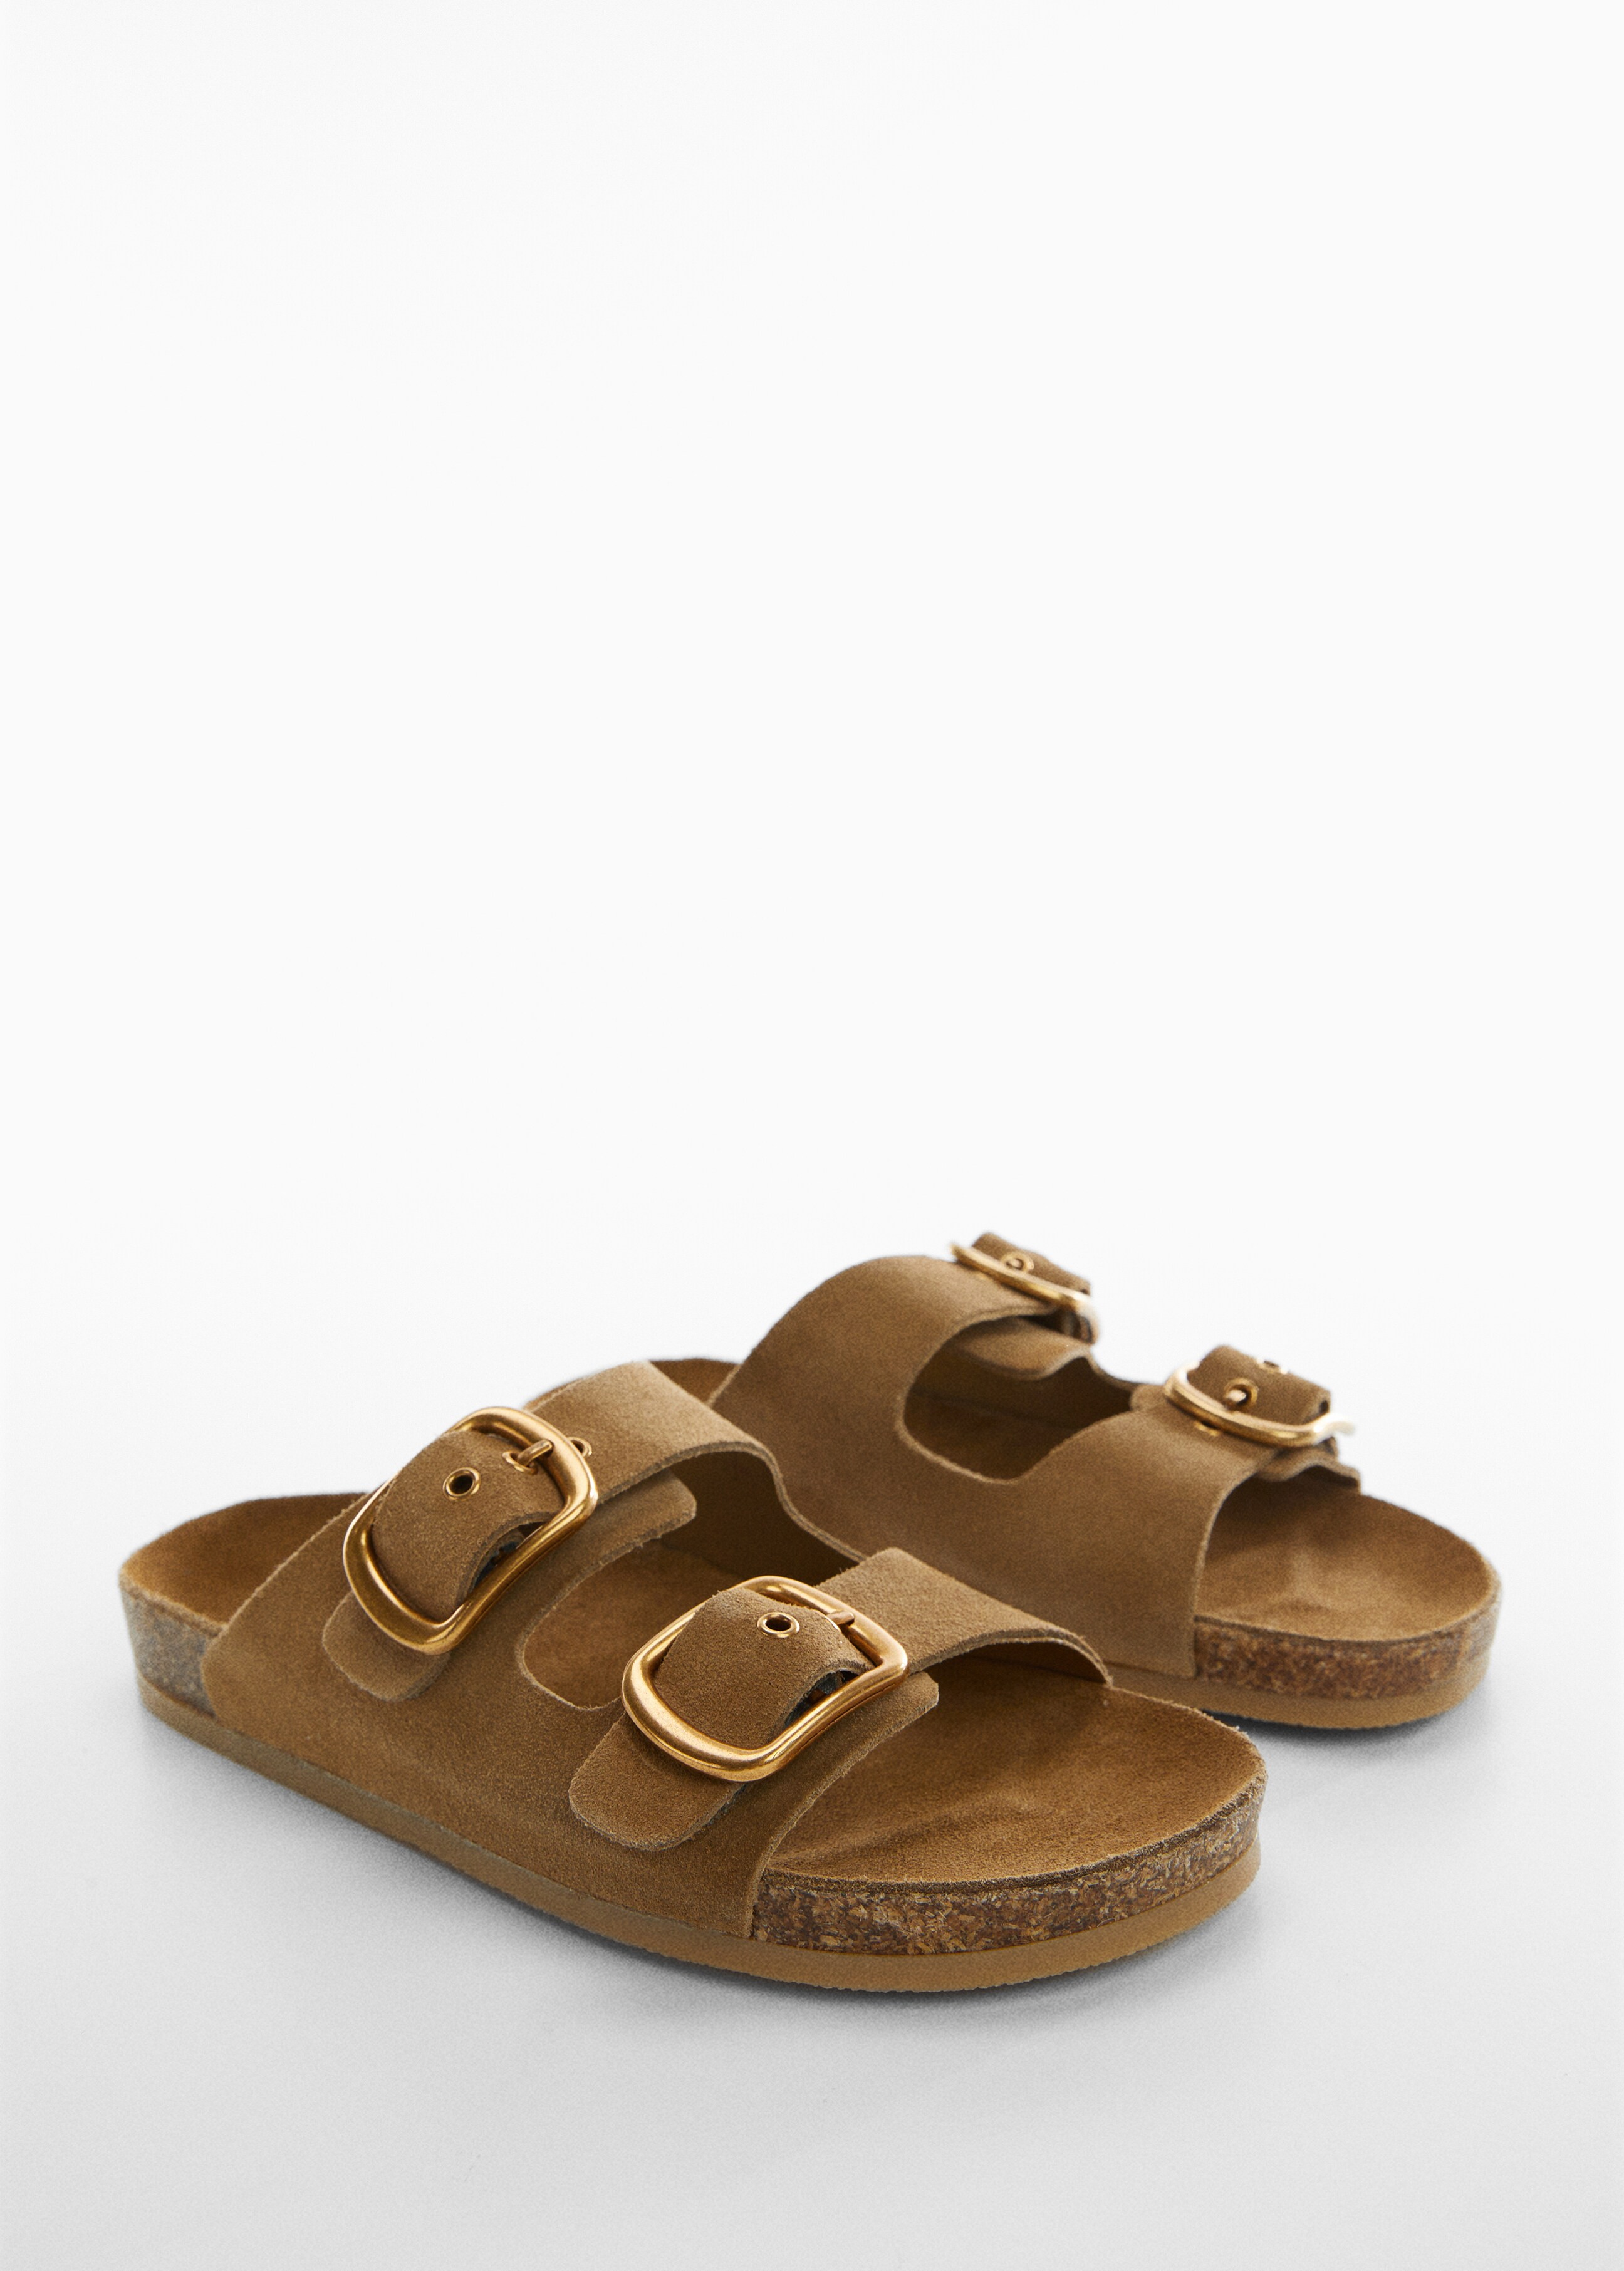 Buckle leather sandals - Medium plane